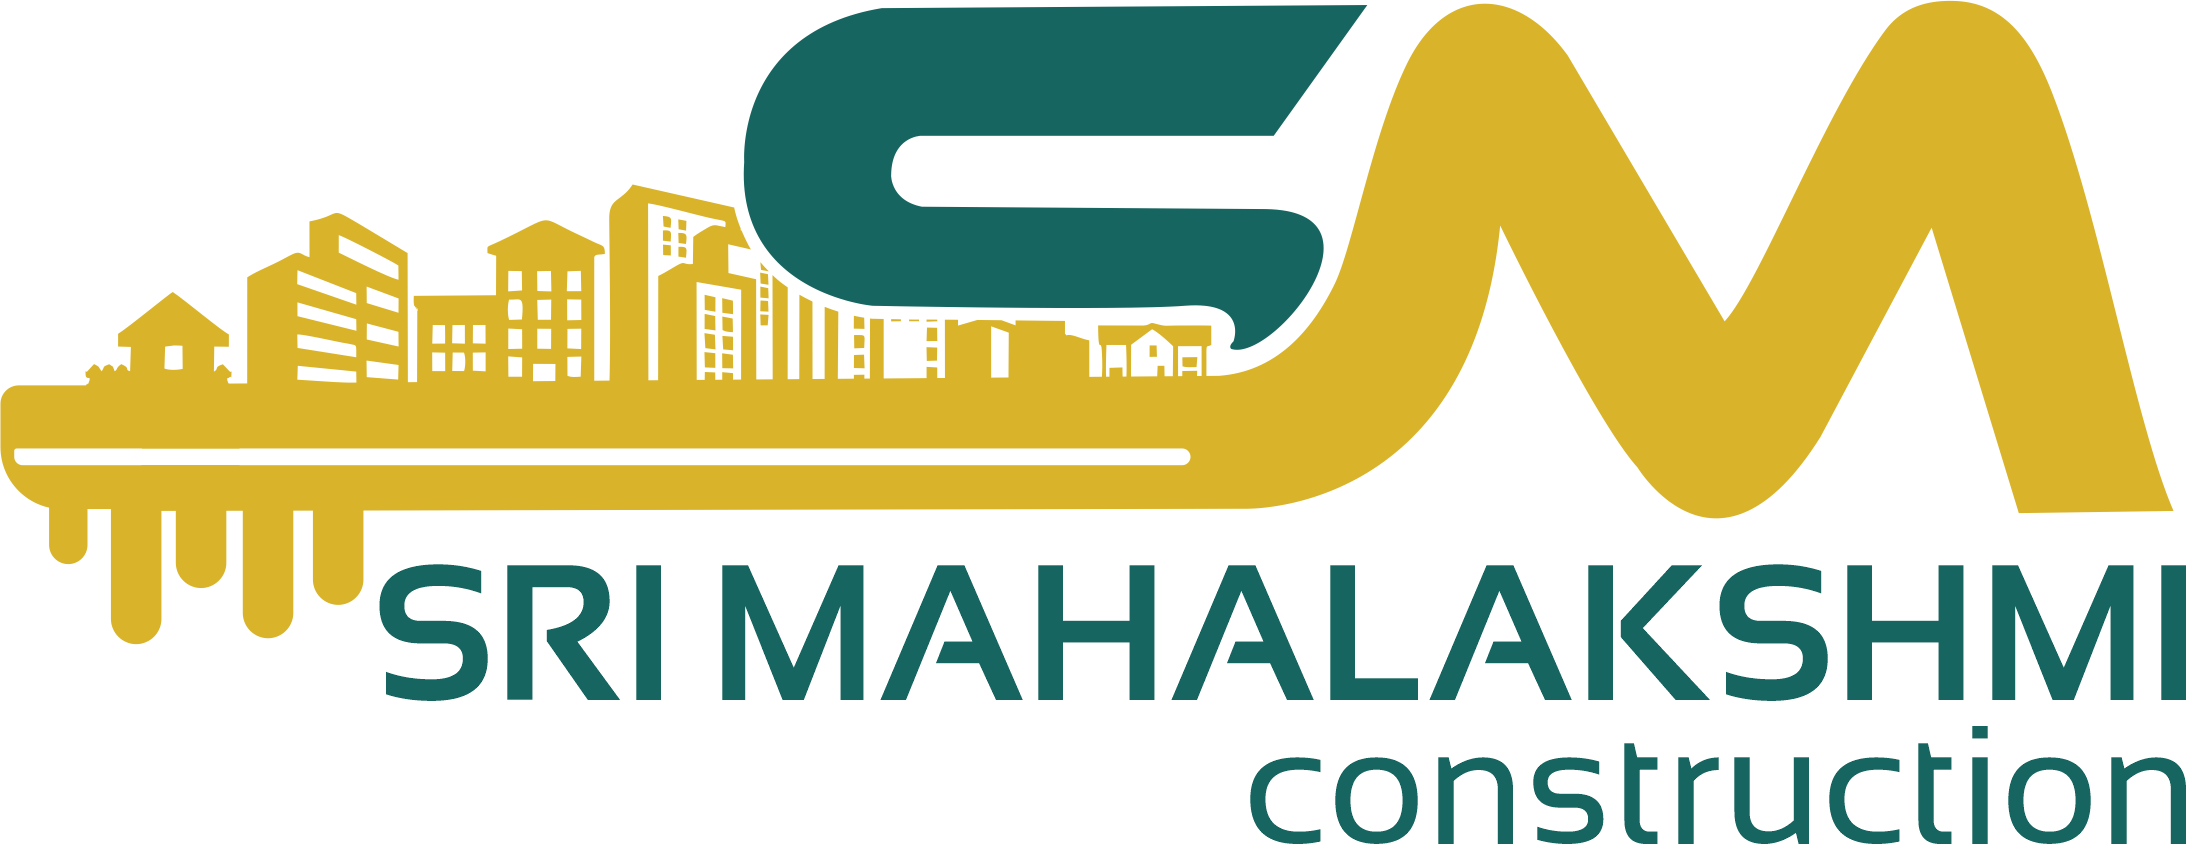 Sri Mahalakshmi Construction